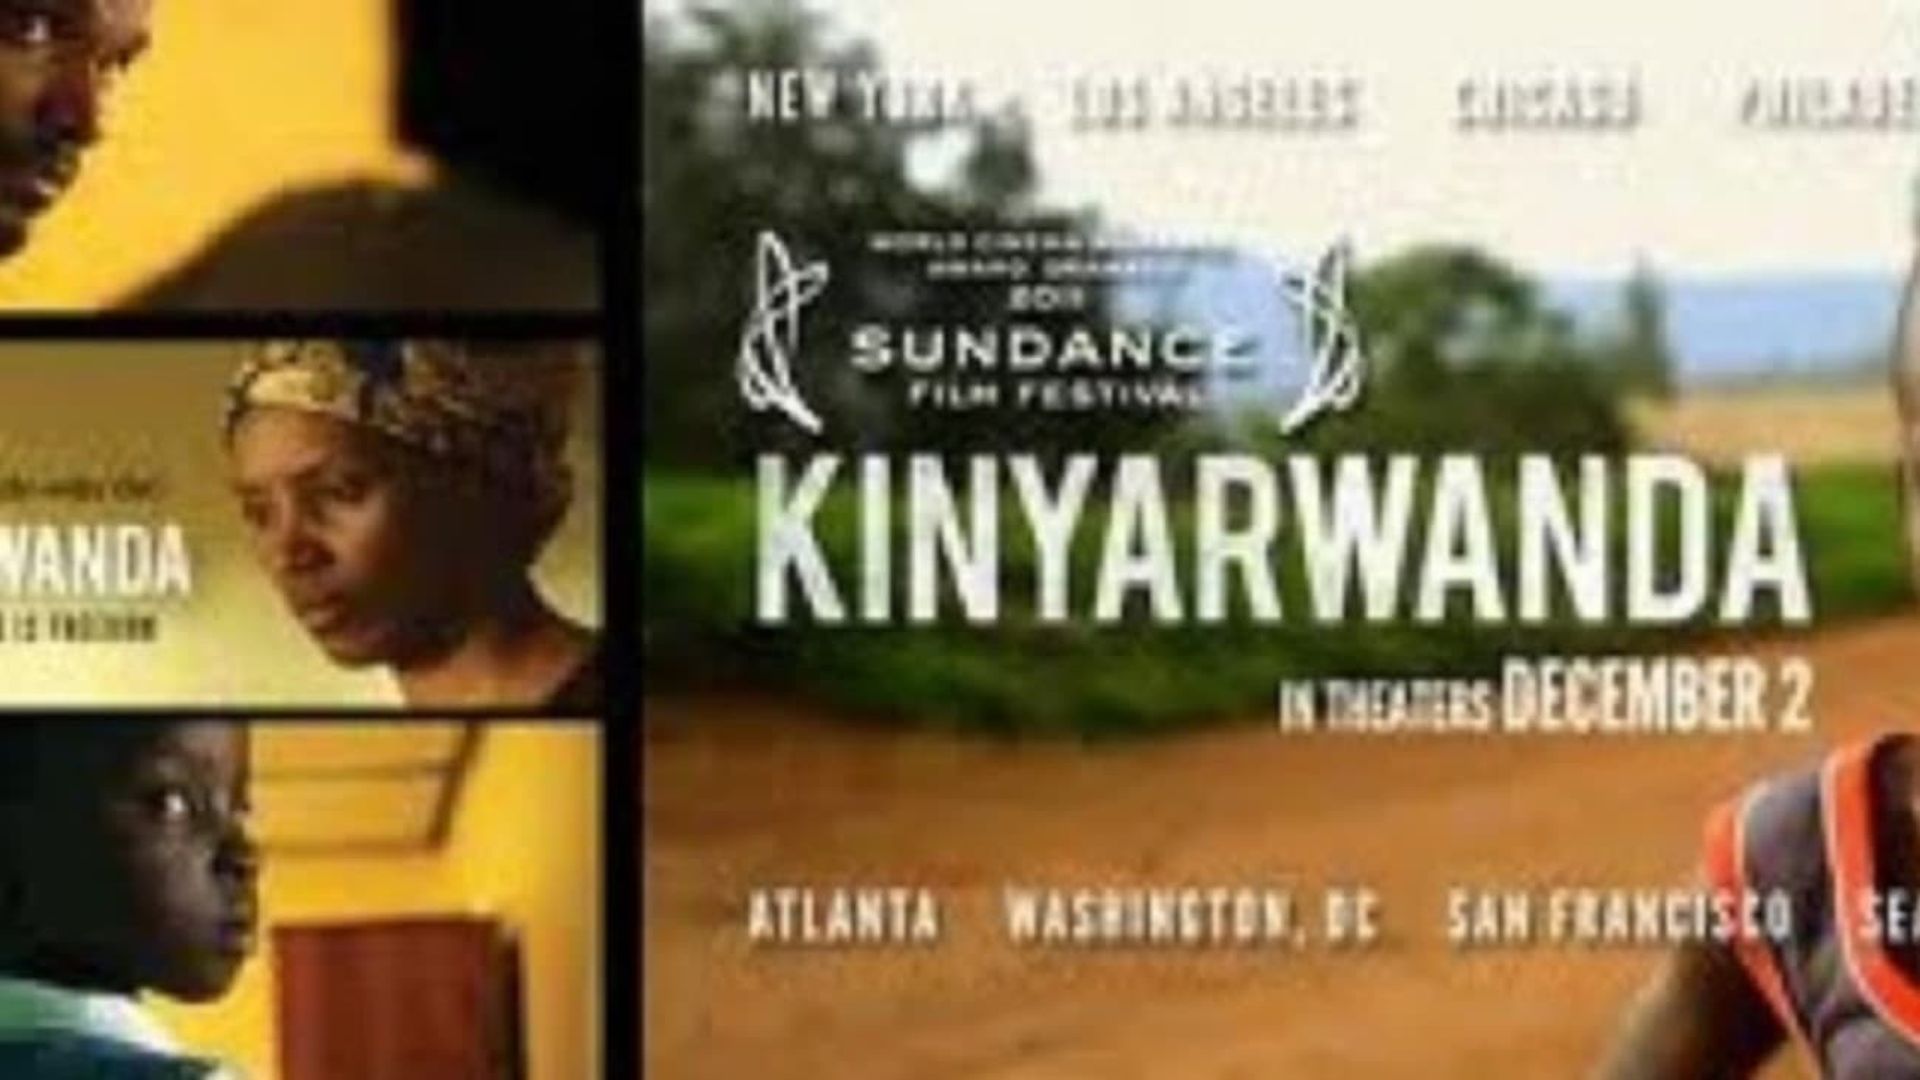 Kinyarwanda background